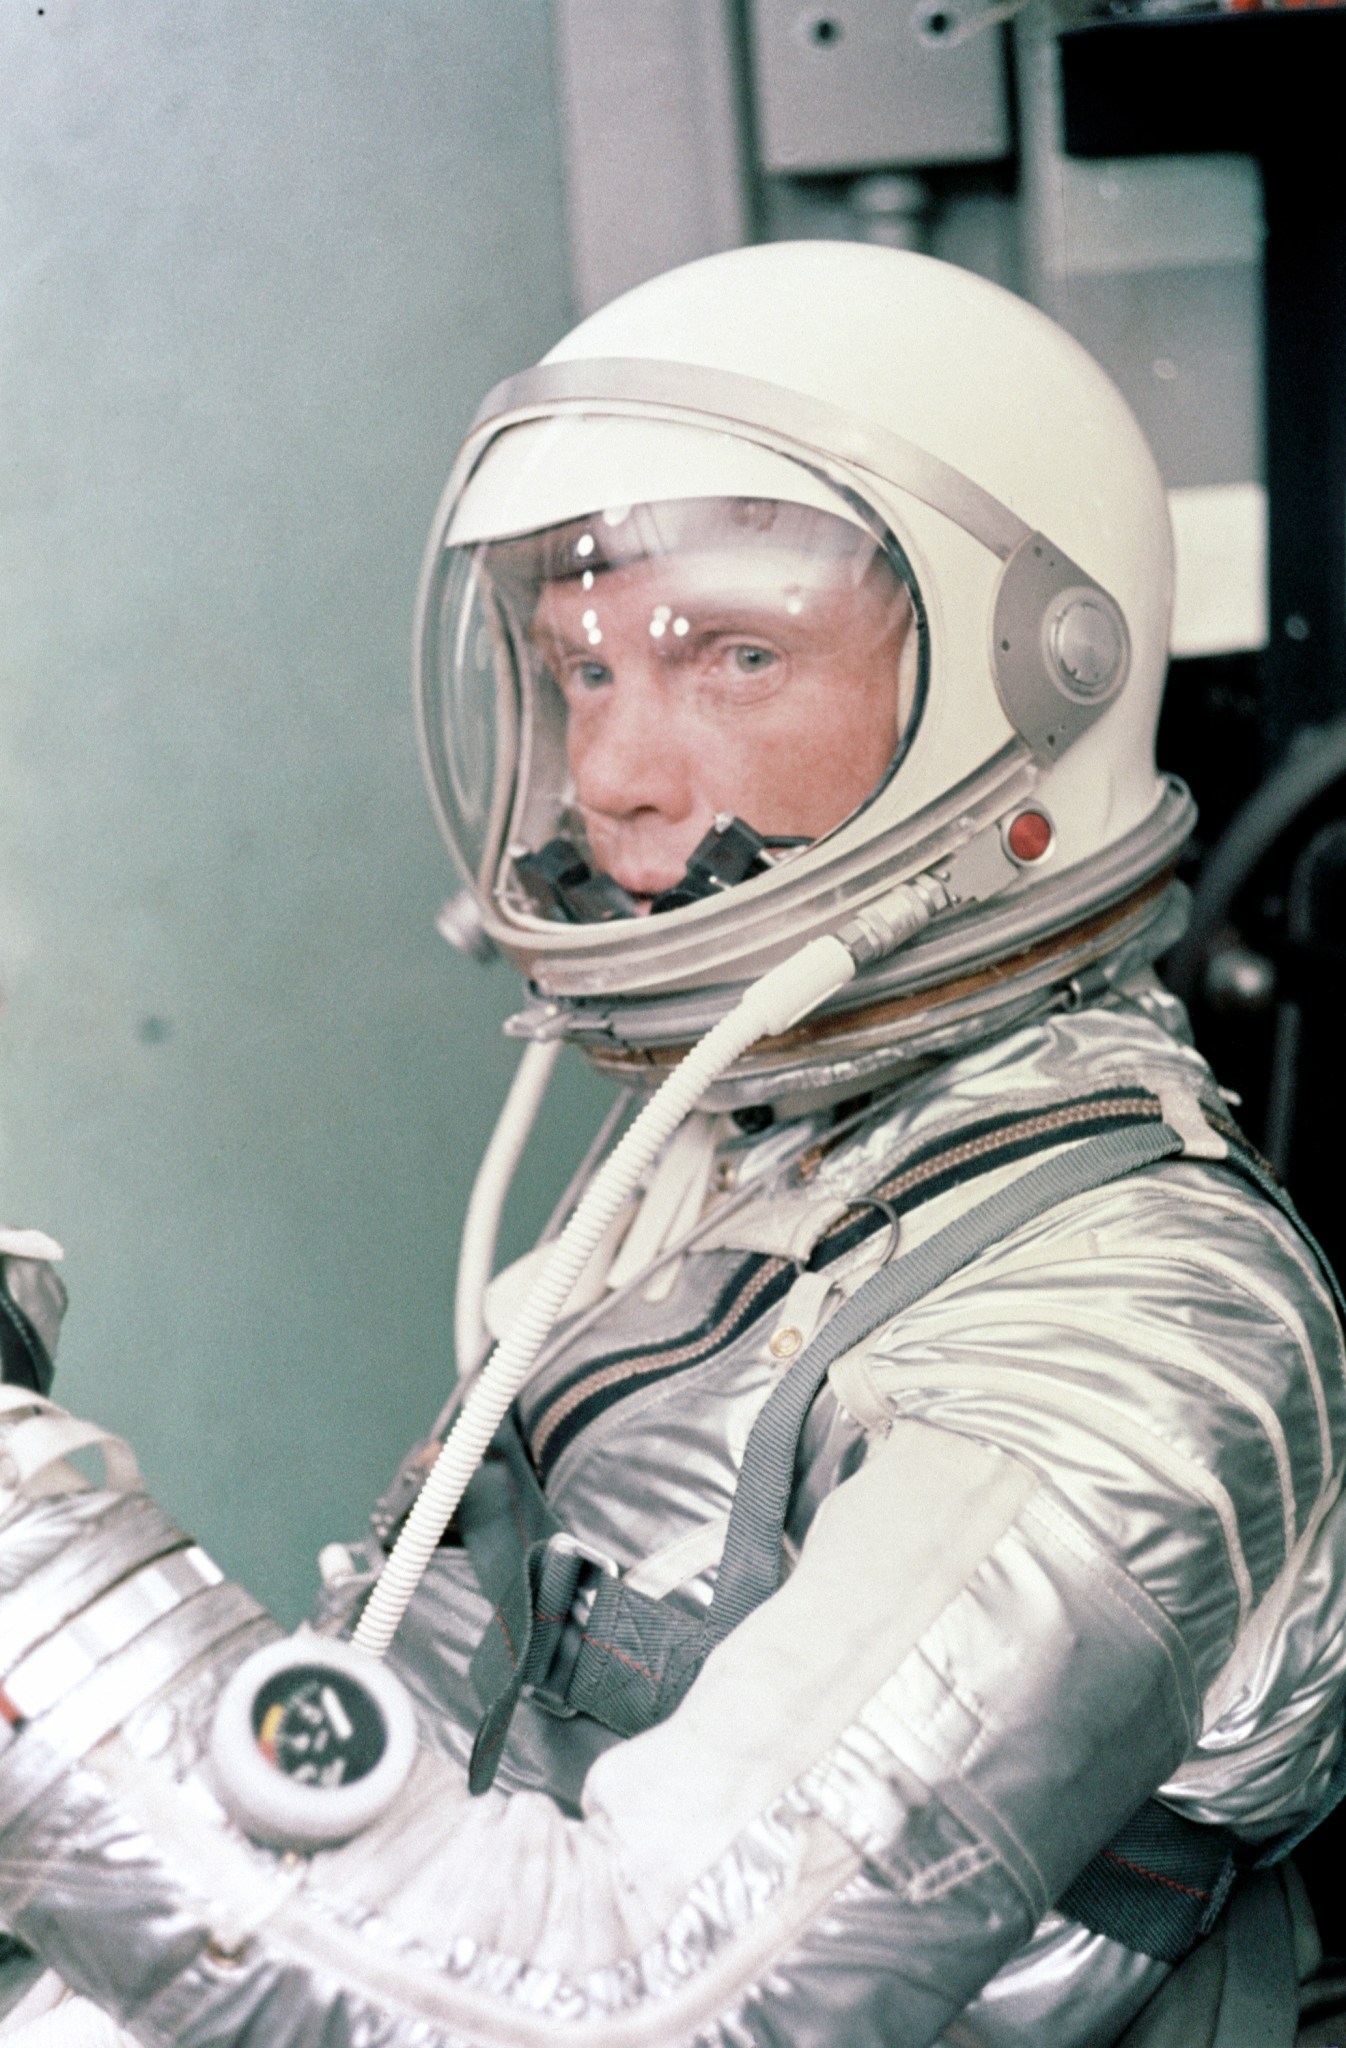 NASA astronaut John Glenn in silver spacesuit